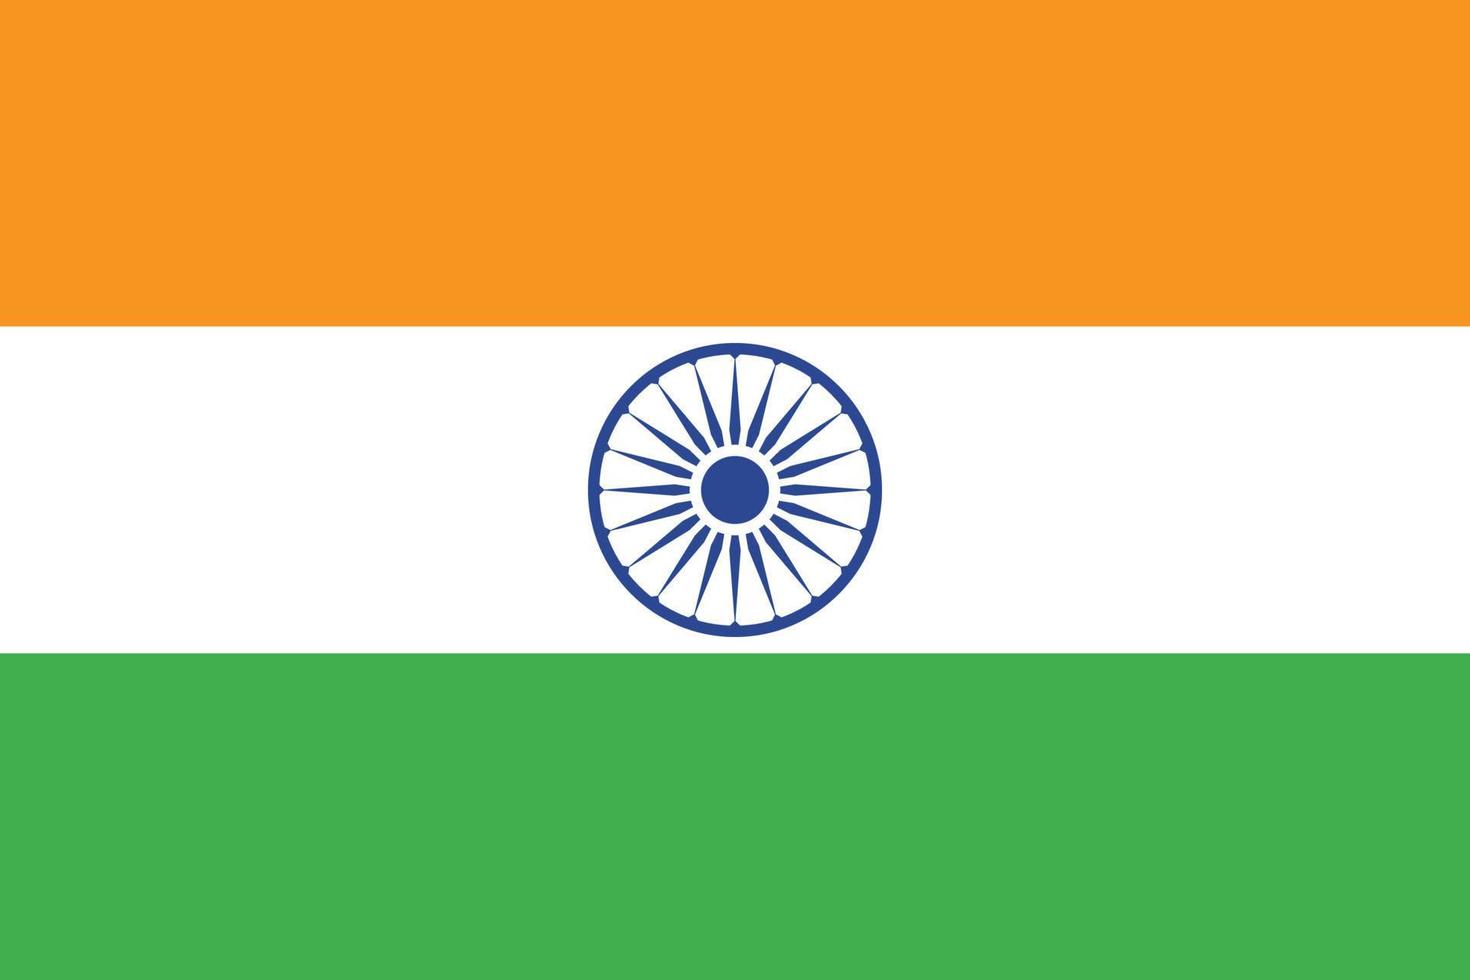 Indien flagga design vektor